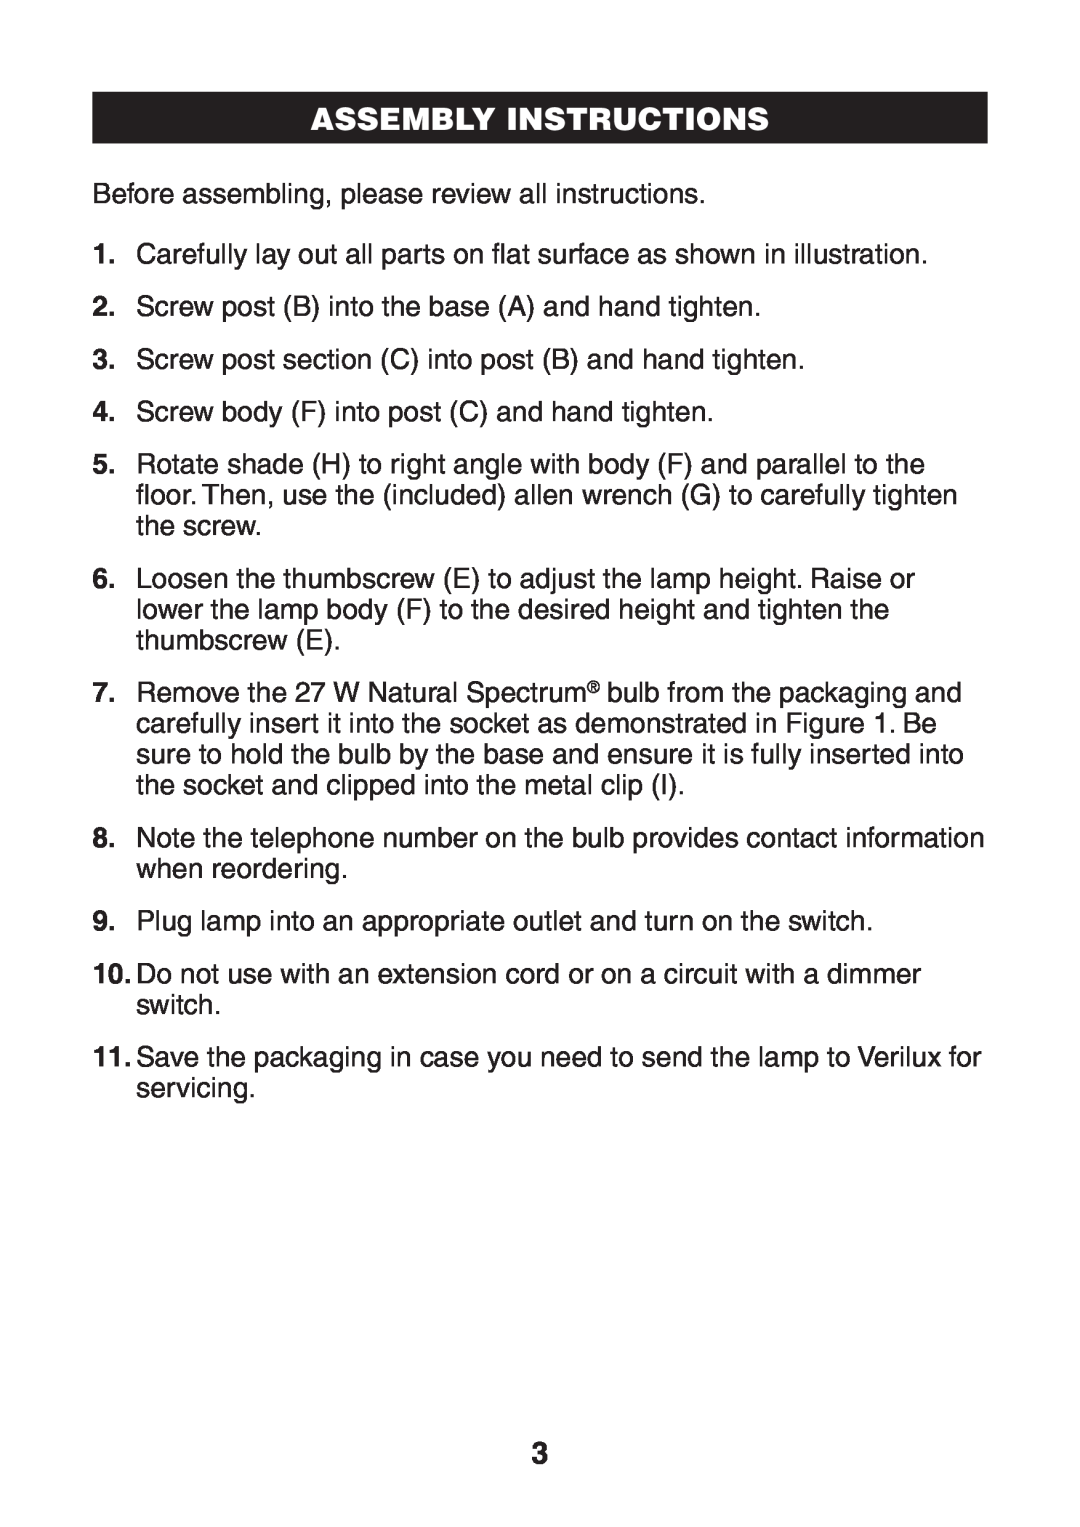 Verilux VF05 manual Assembly Instructions 